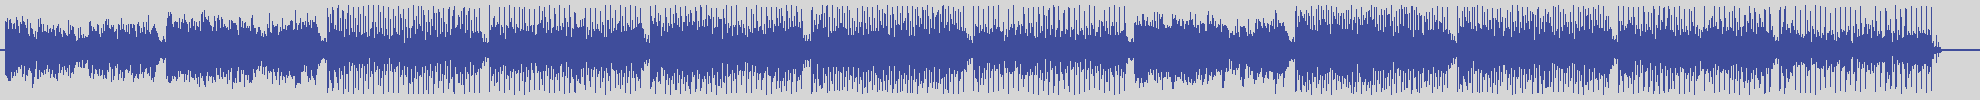 nf_boyz_records [NFY058] Saverio Soave - Overview [Original Mix] audio wave form